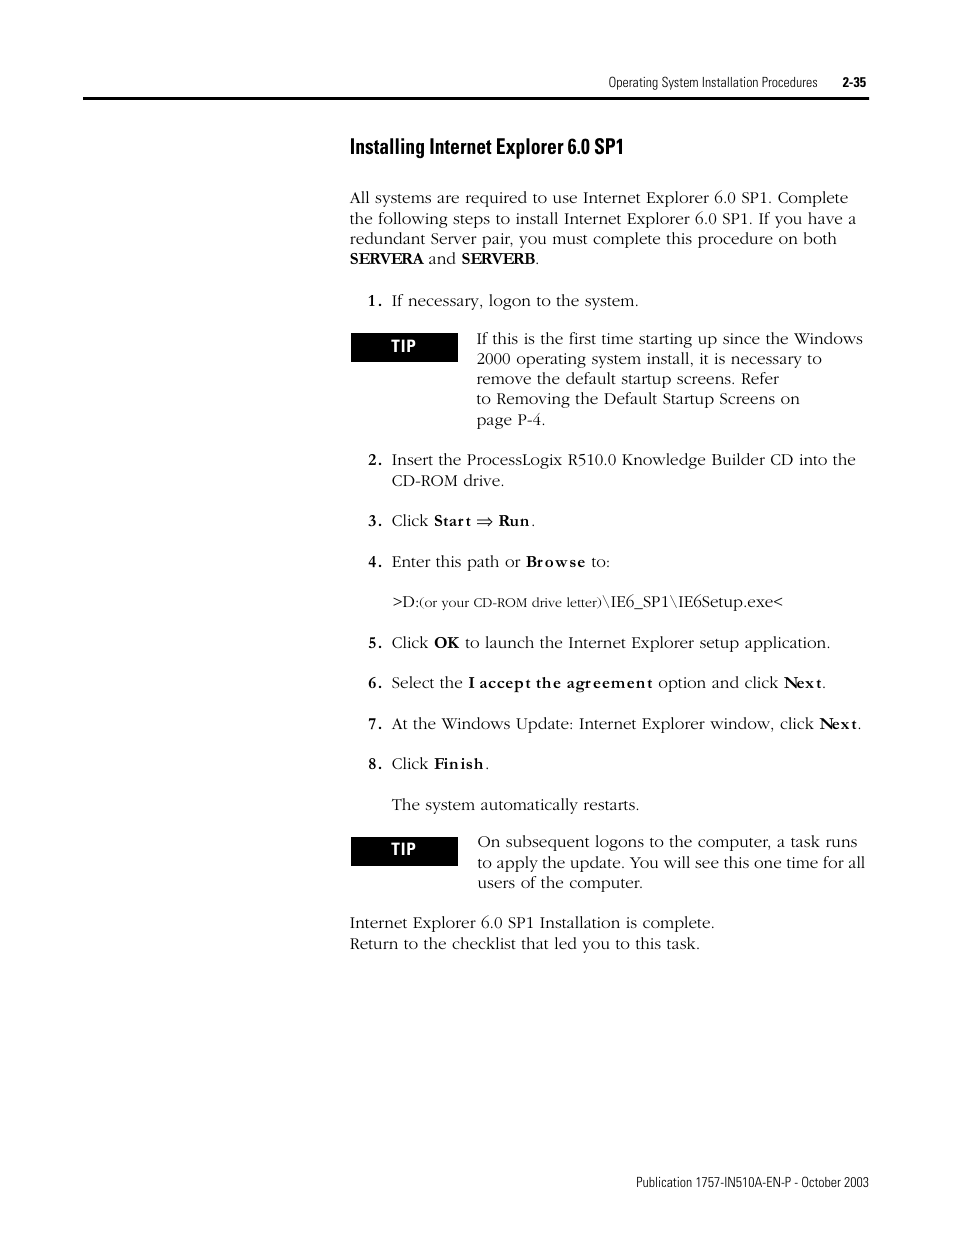 Installing internet explorer 6.0 sp1, Installing internet explorer 6.0 sp1 -35 | Rockwell Automation 1757-SWKIT5100 ProcessLogix R510.0 Installation and Upgrade Guide User Manual | Page 55 / 271